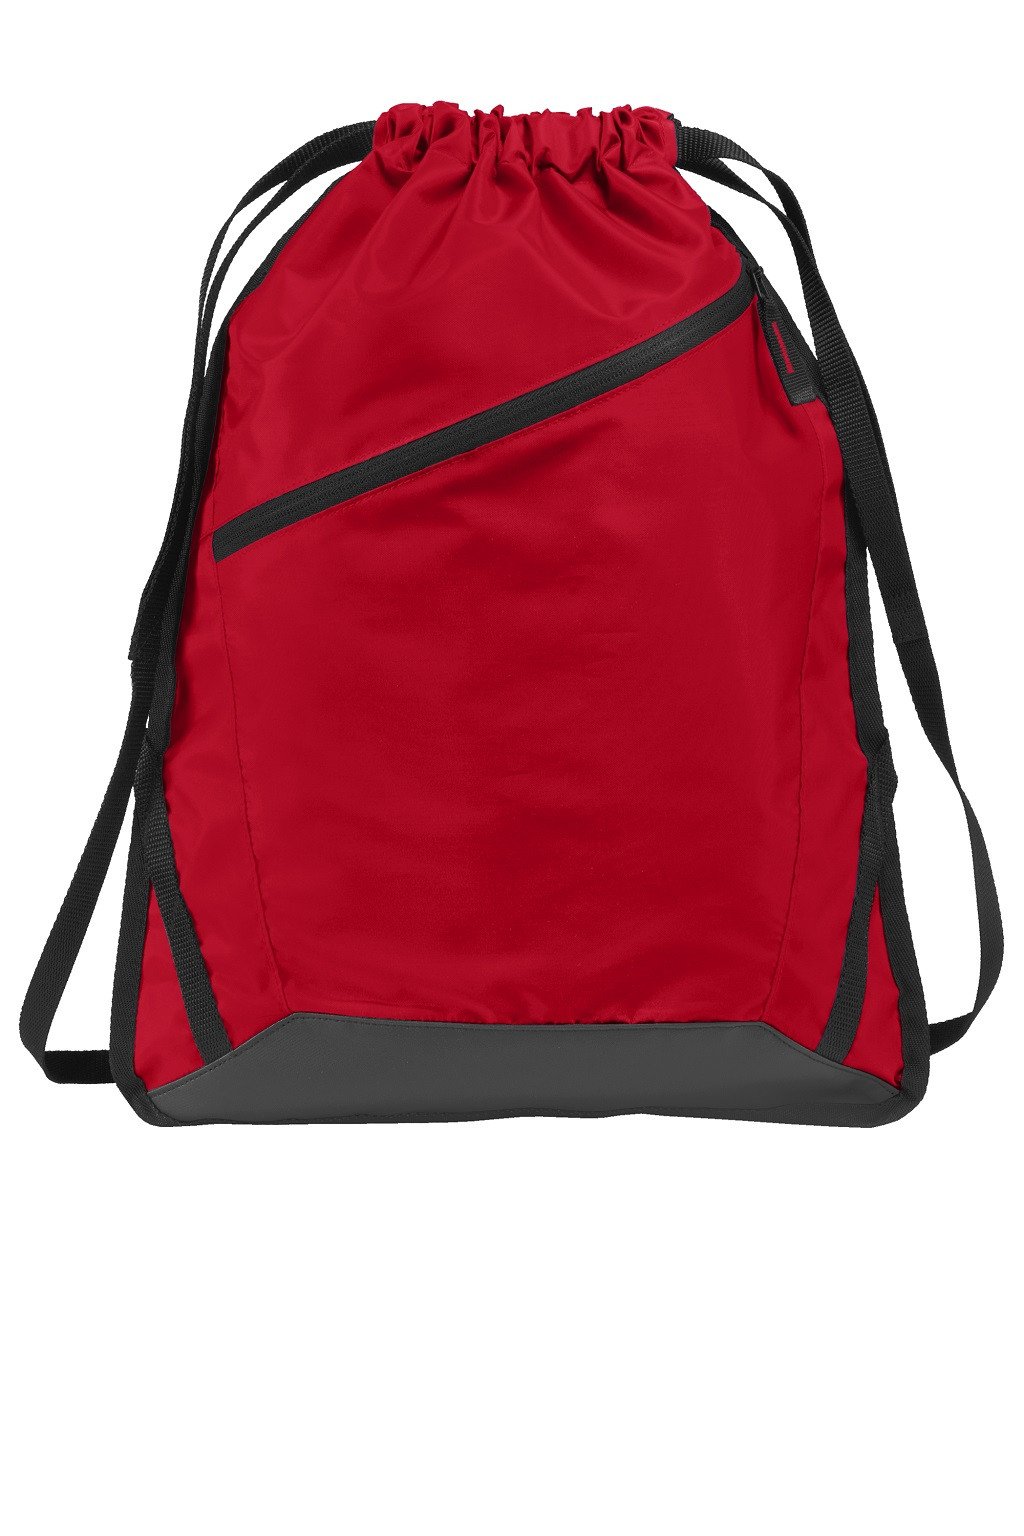 red drawstring backpacks for school